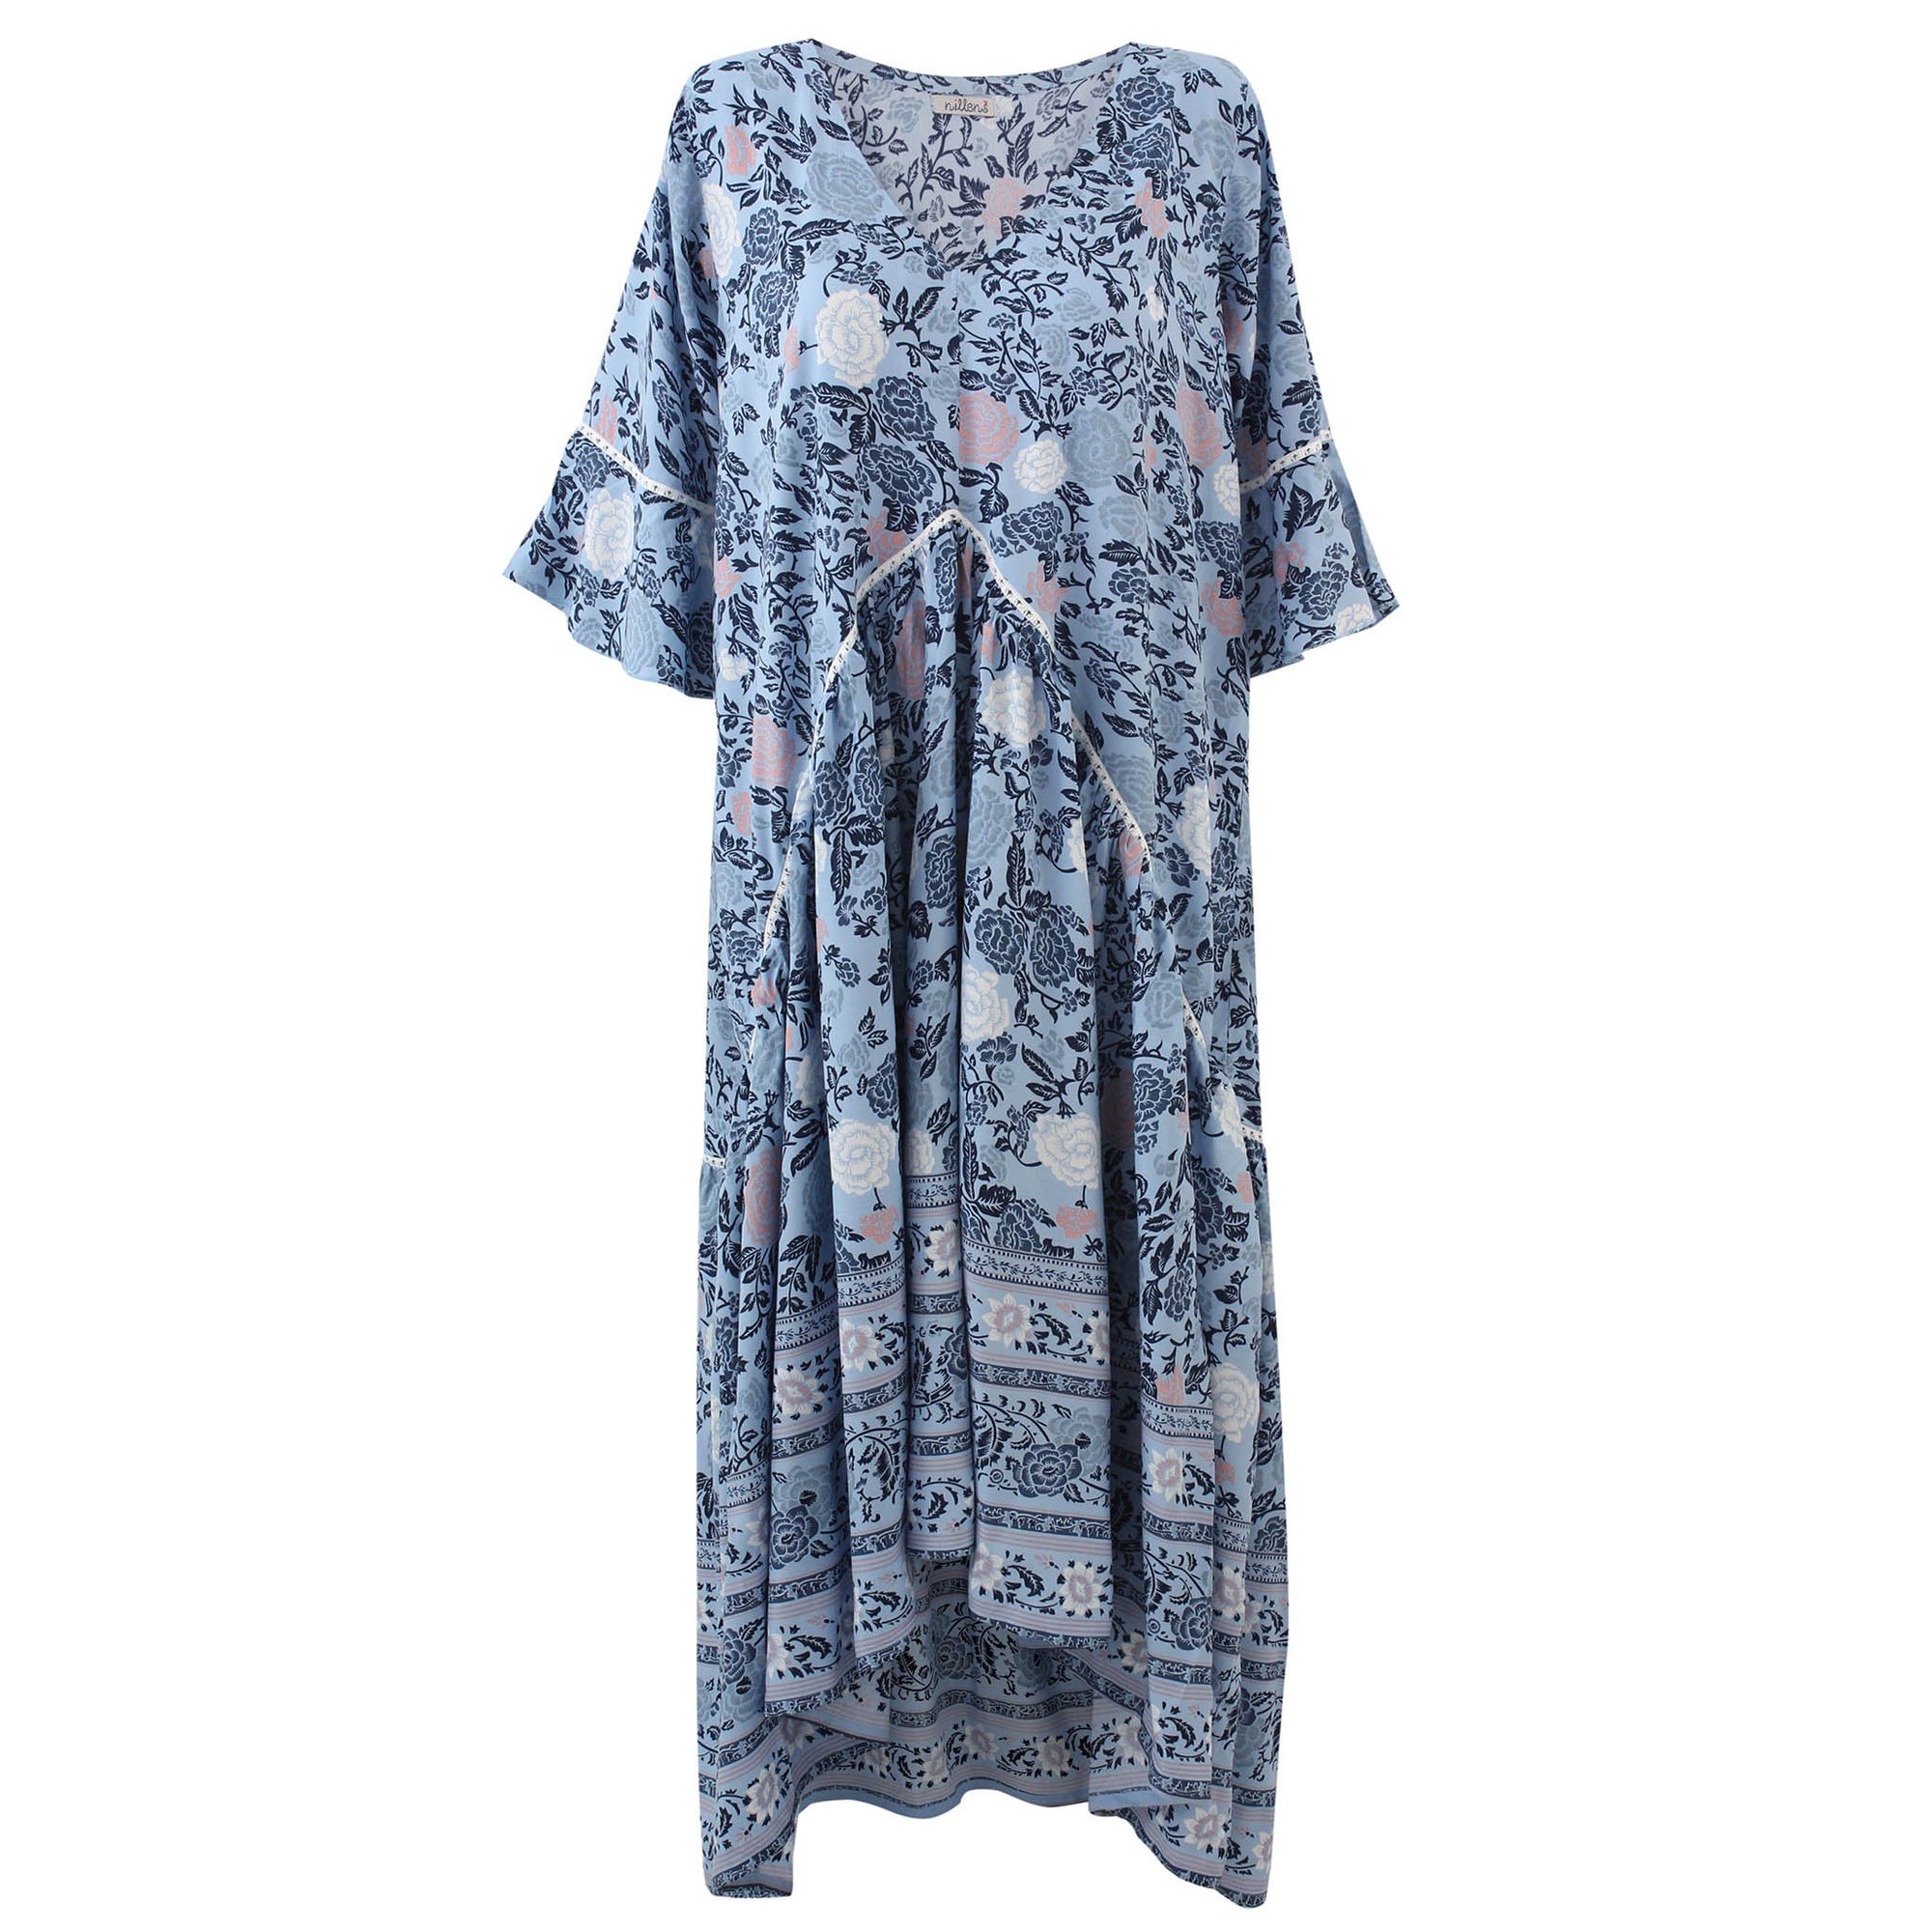 Breezy Summer Printed Dress (Blue)